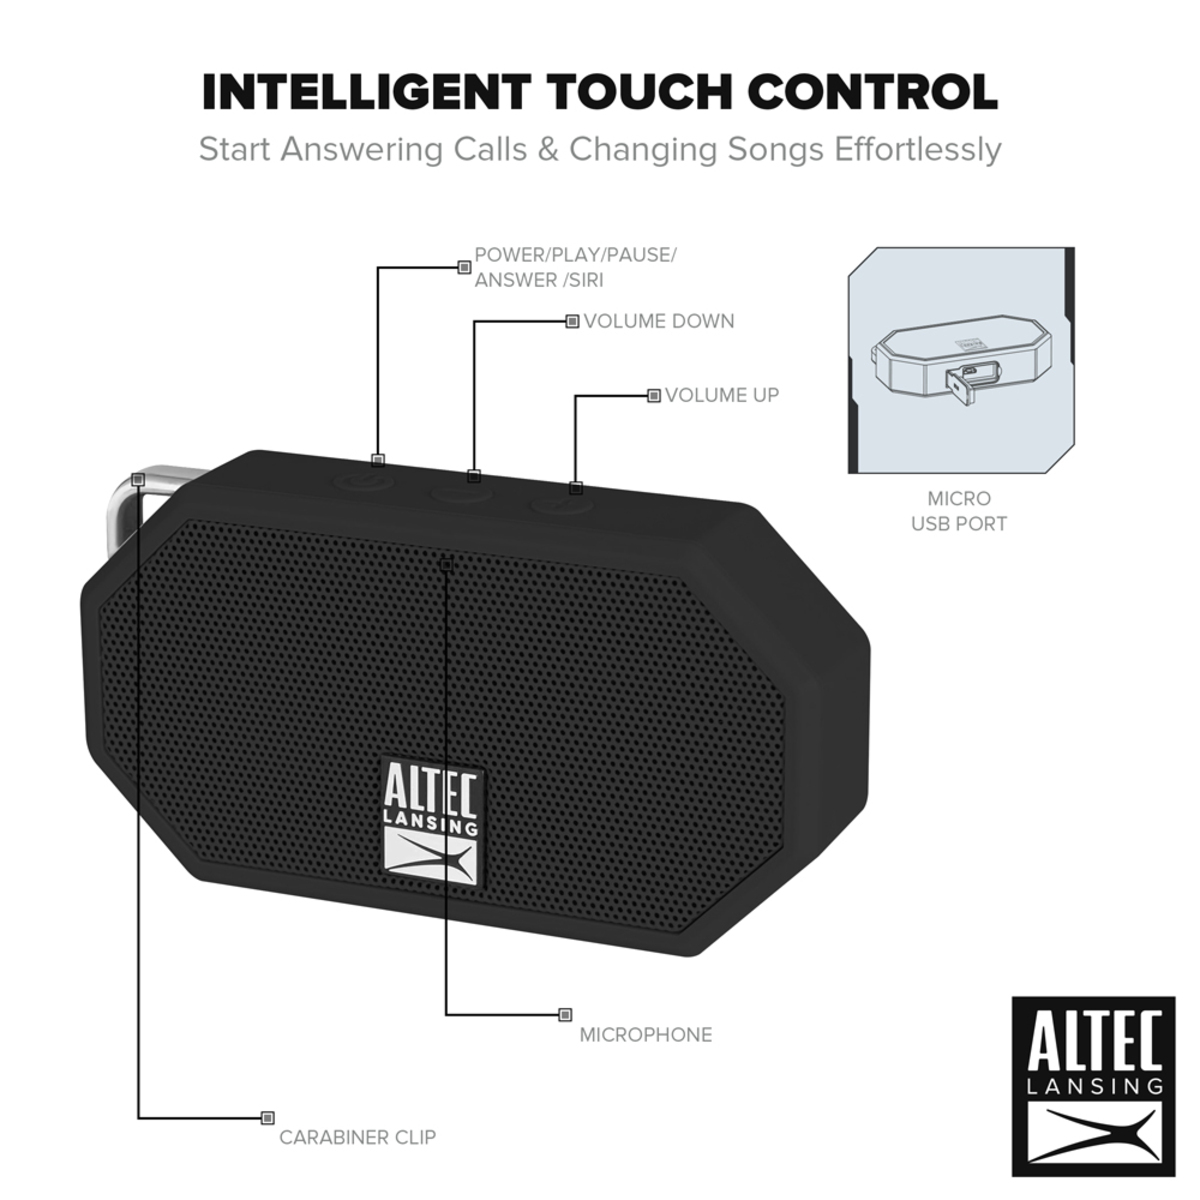 Altec Lansing Mini H20 Bluetooth Speaker W258N Black